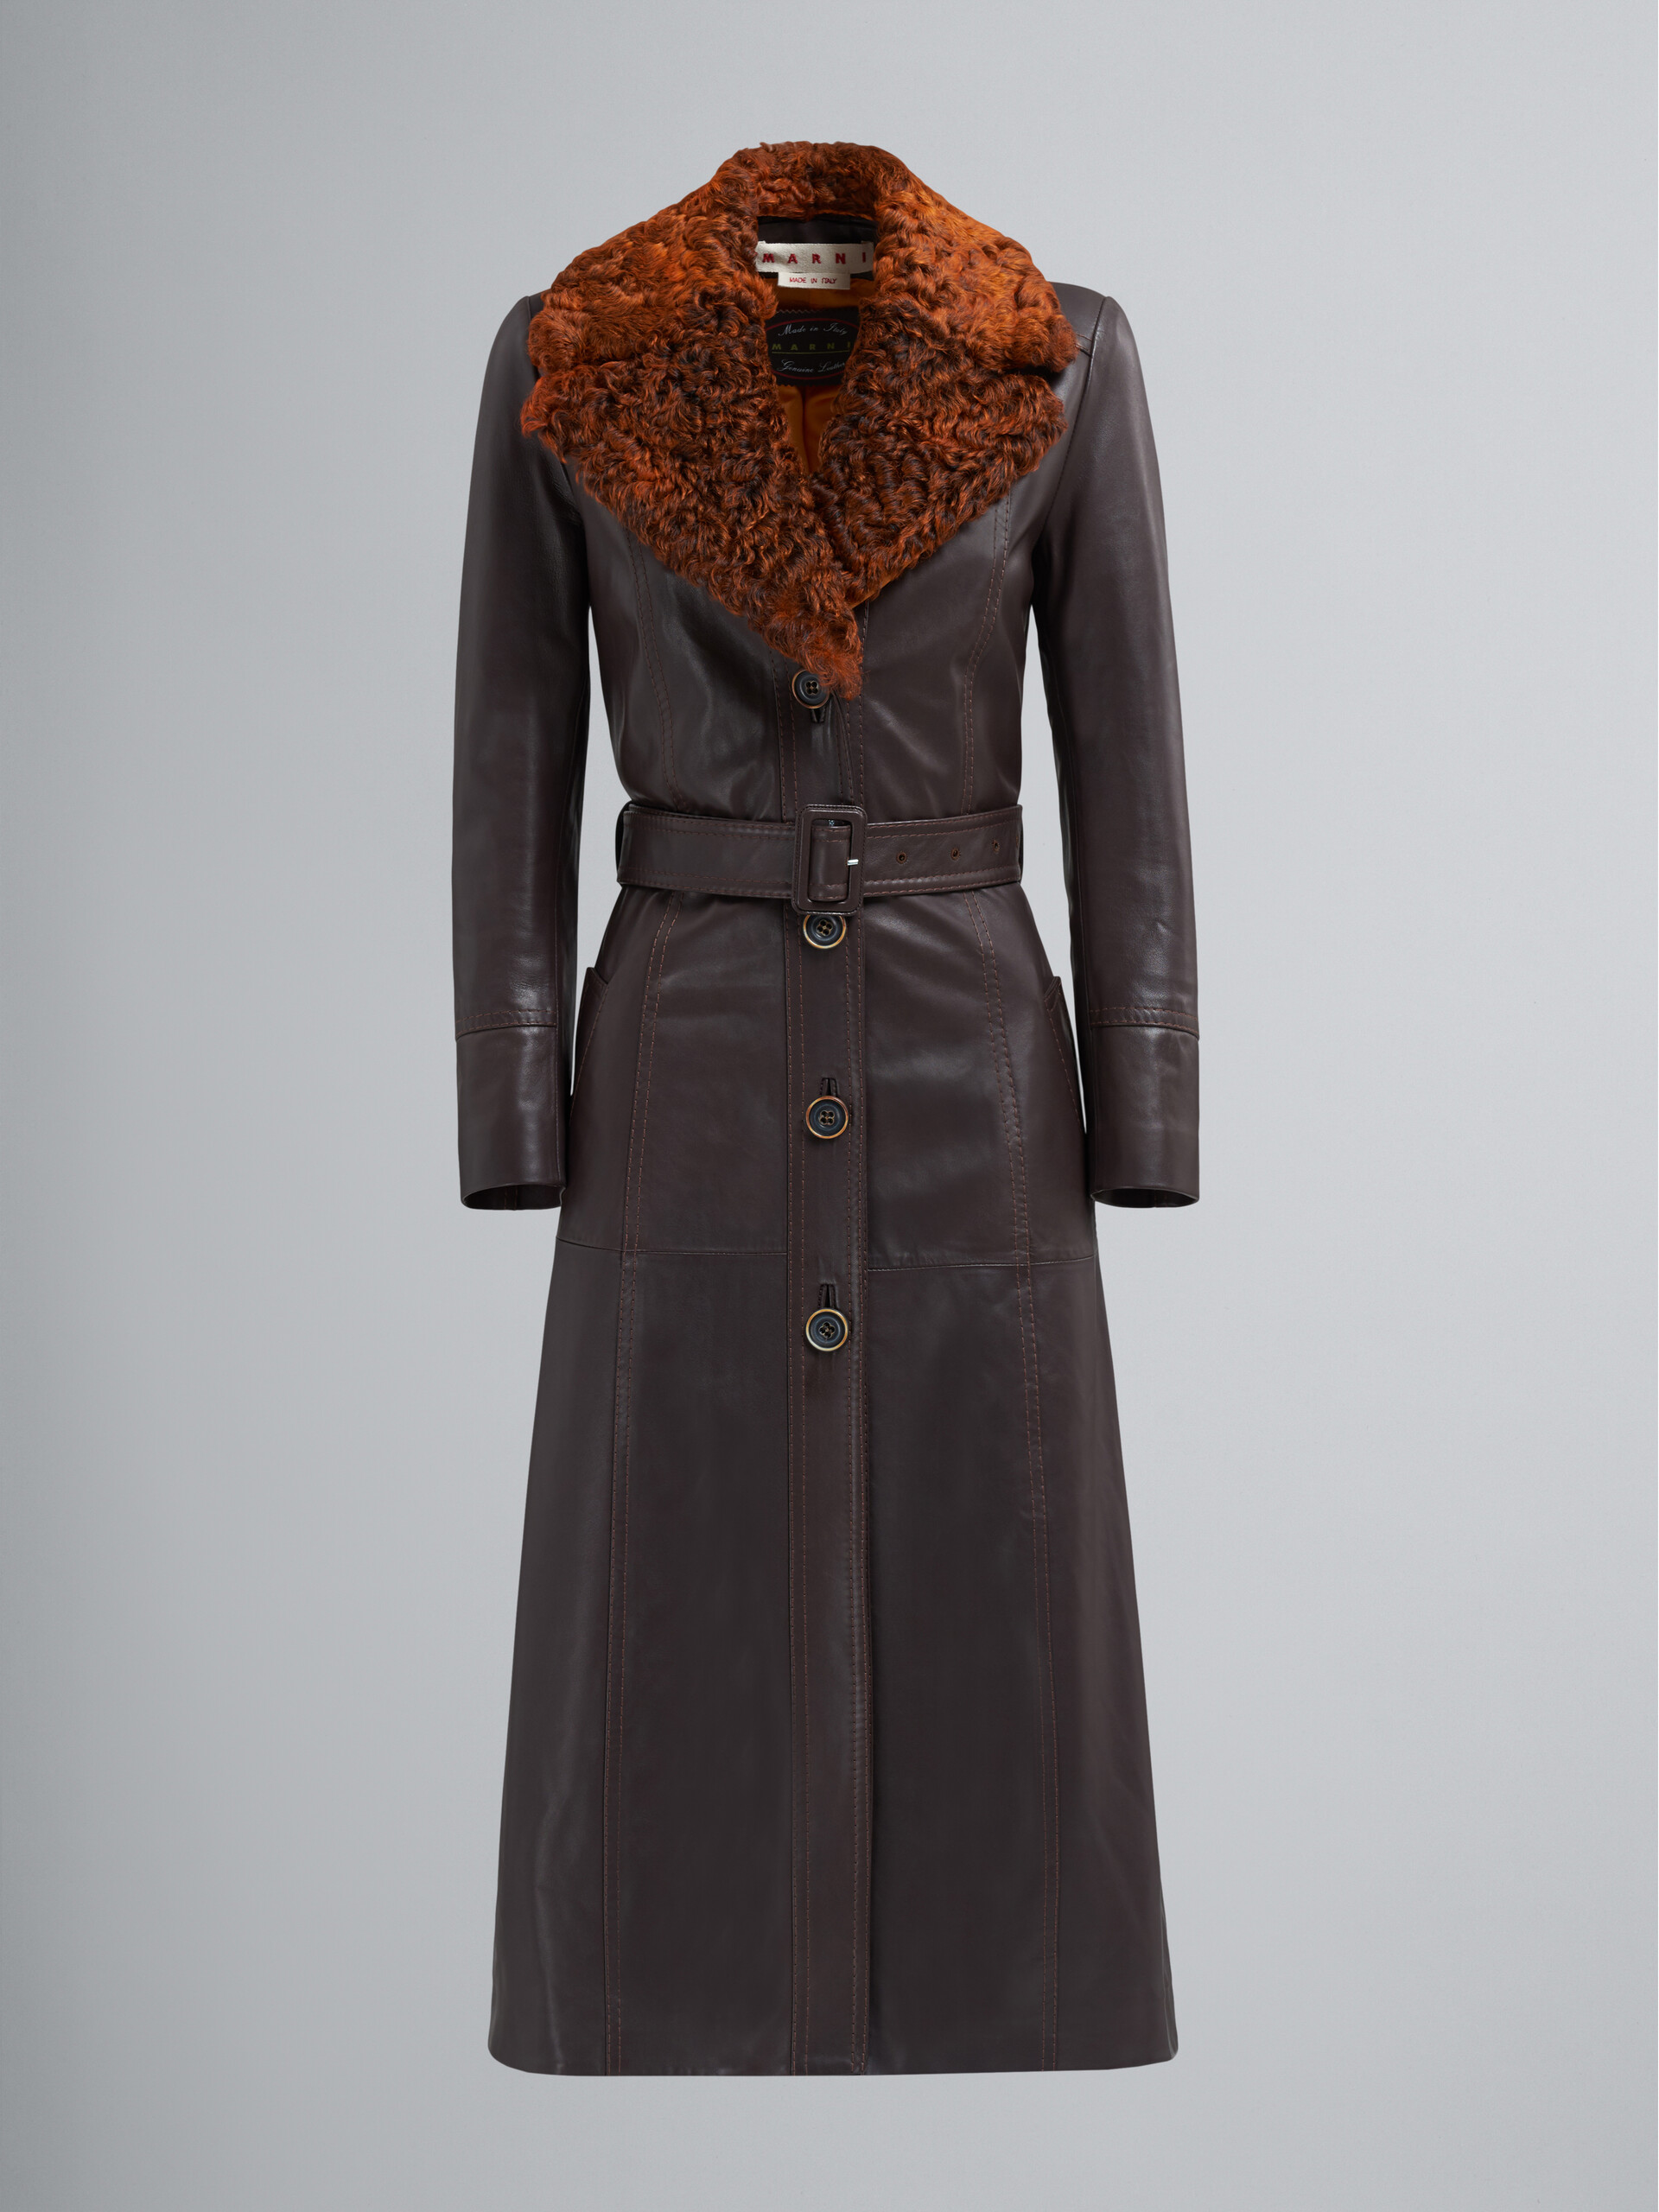 Natural nappa leather coat - Coat - Image 1